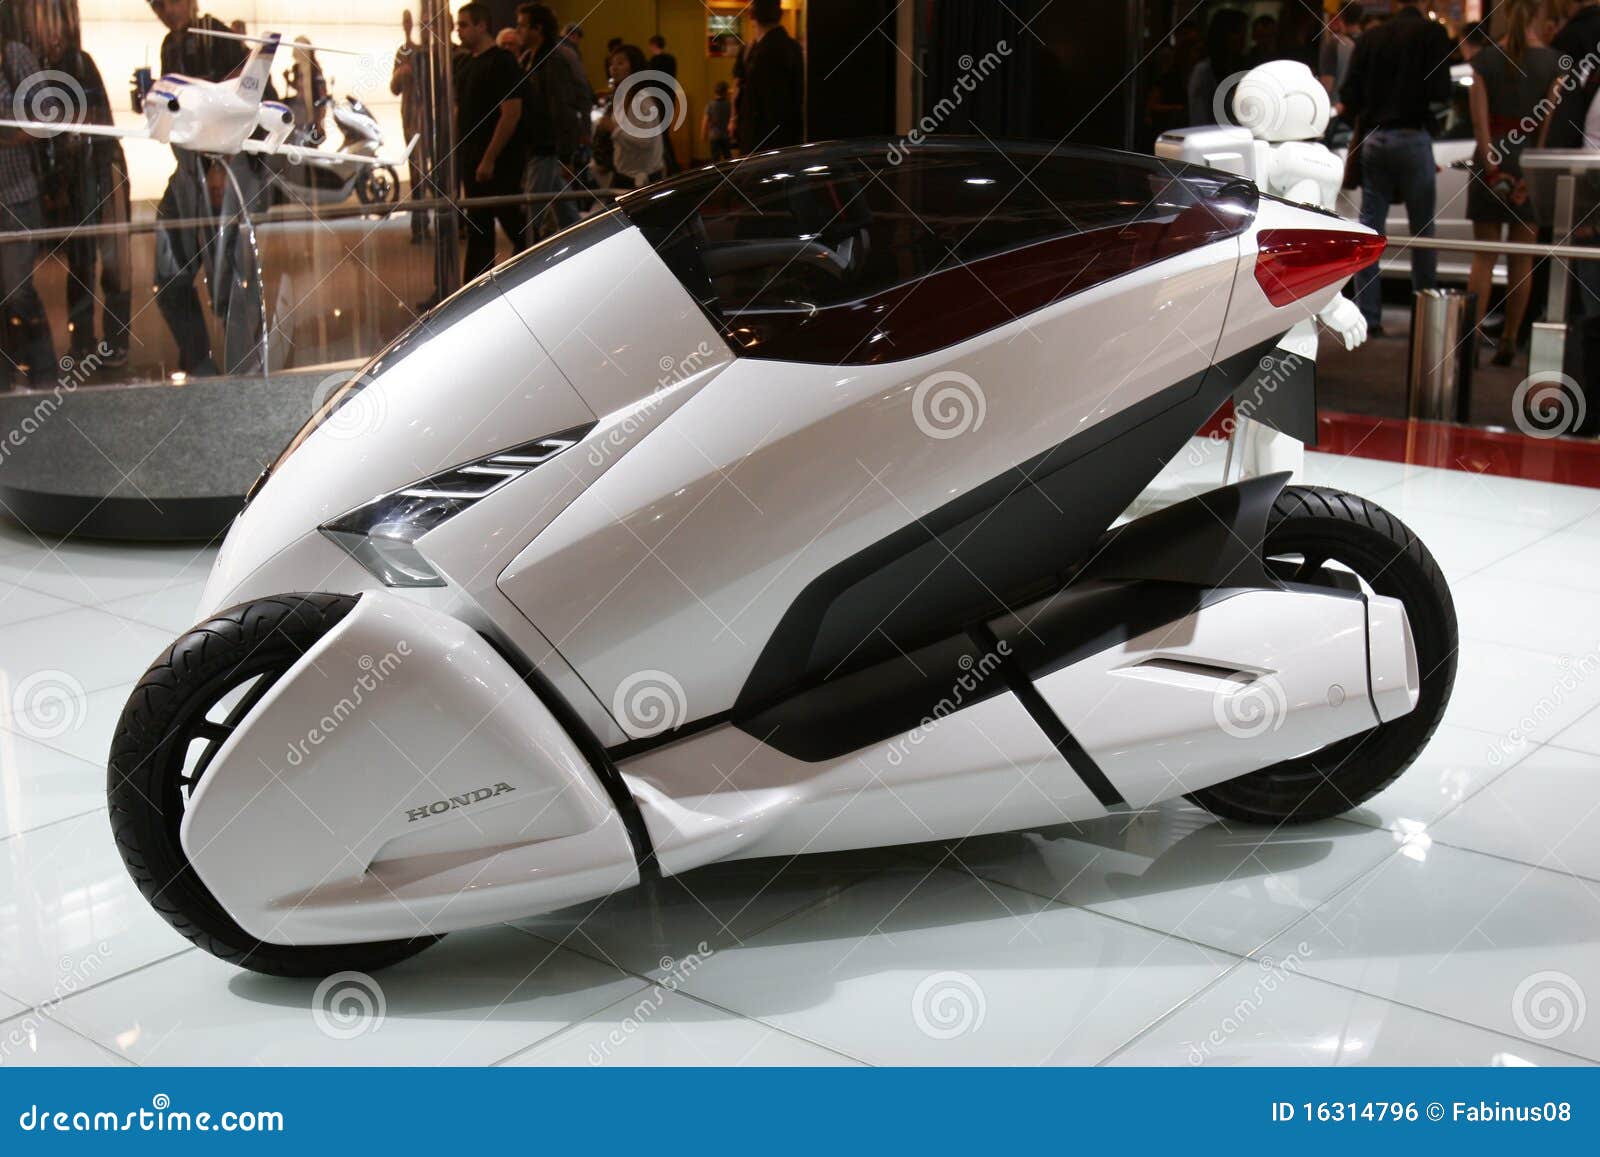 3RC concept moto car editorial photo. of cars - 16314796